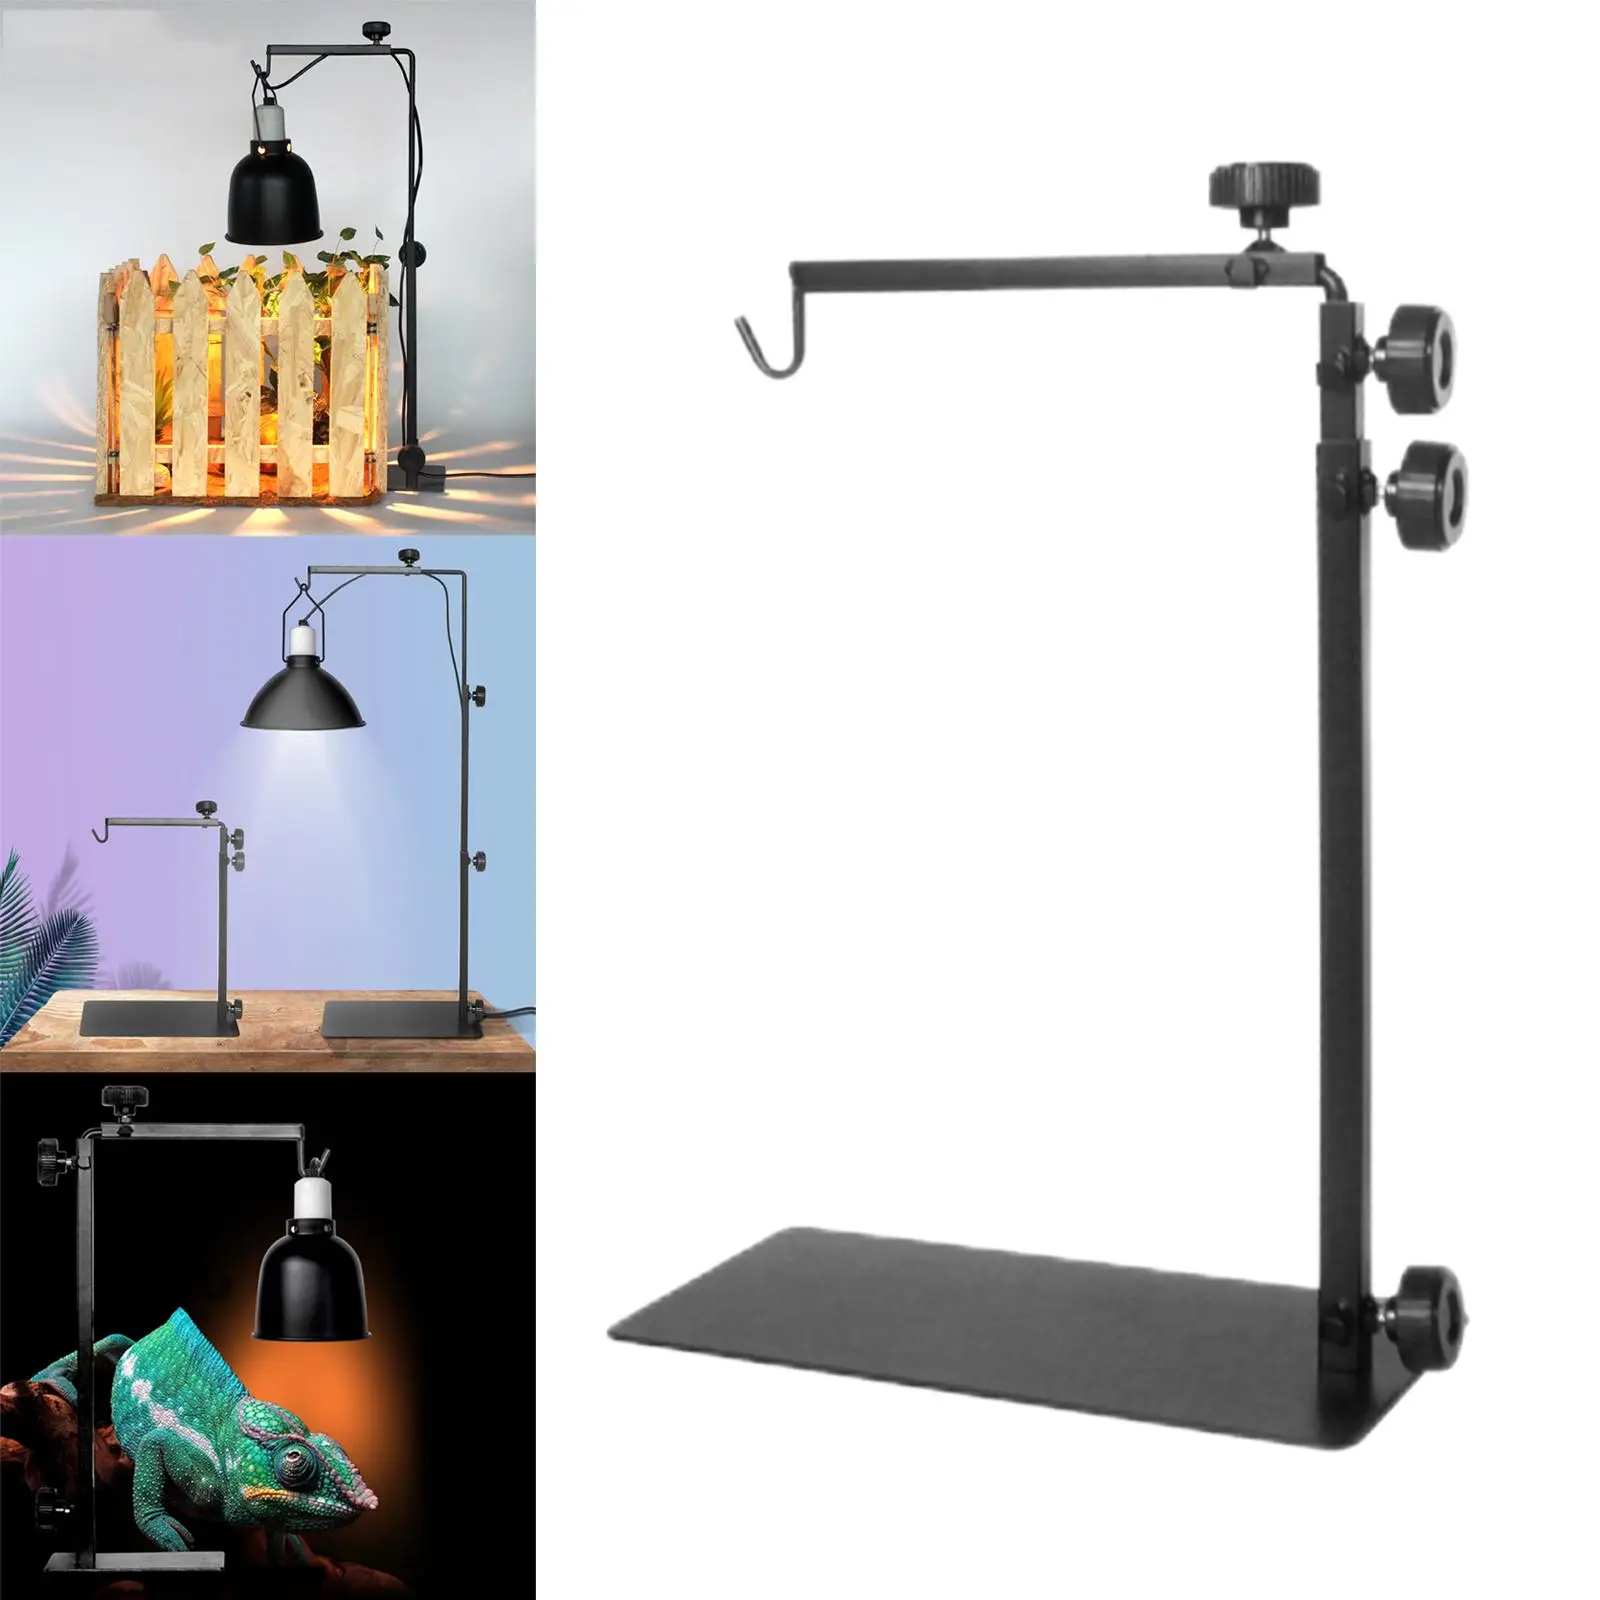 Reptile Lamp Stand Adjustable Floor Light Holder Landing Bracket Metal Support for Heating Shelf Base Black Practical Durable 